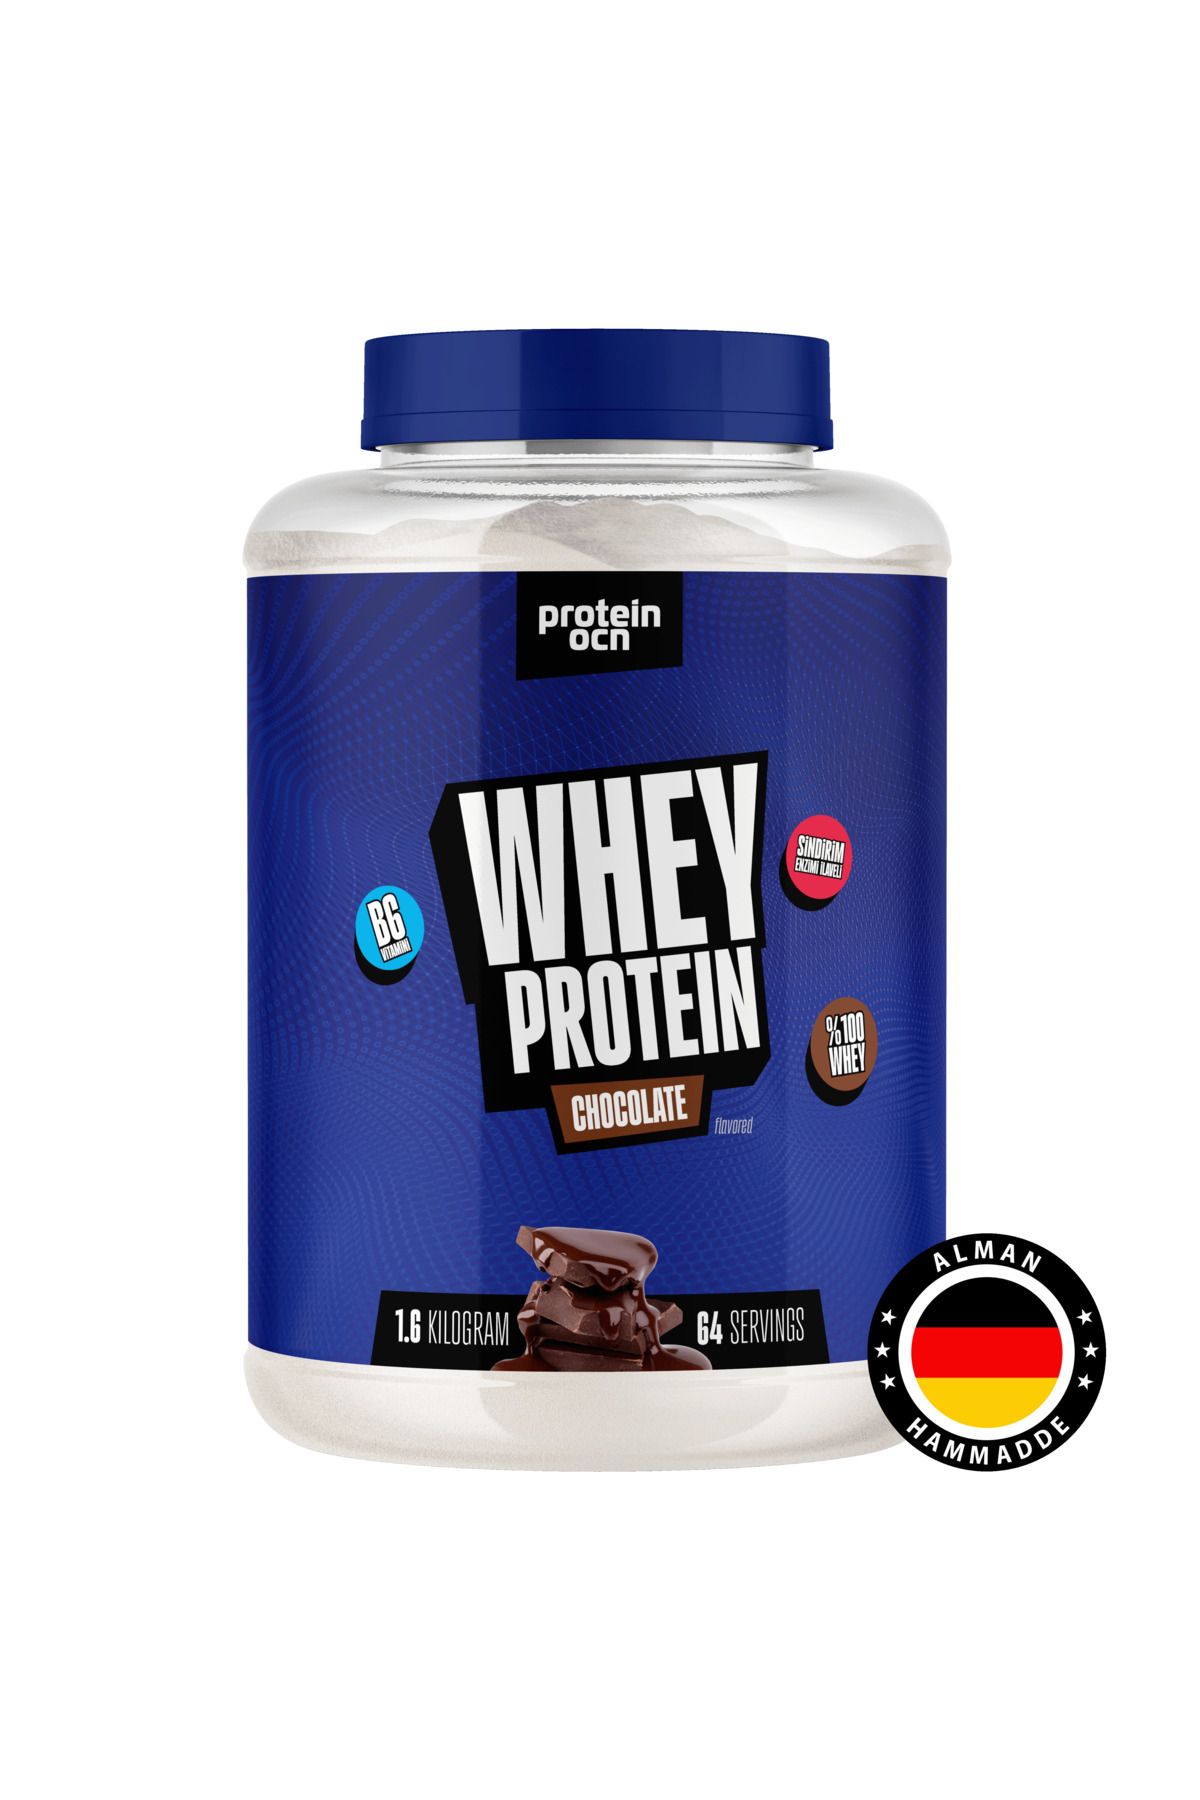 Proteinocean Whey Protein Çikolata - 1.6kg - 64 Servis